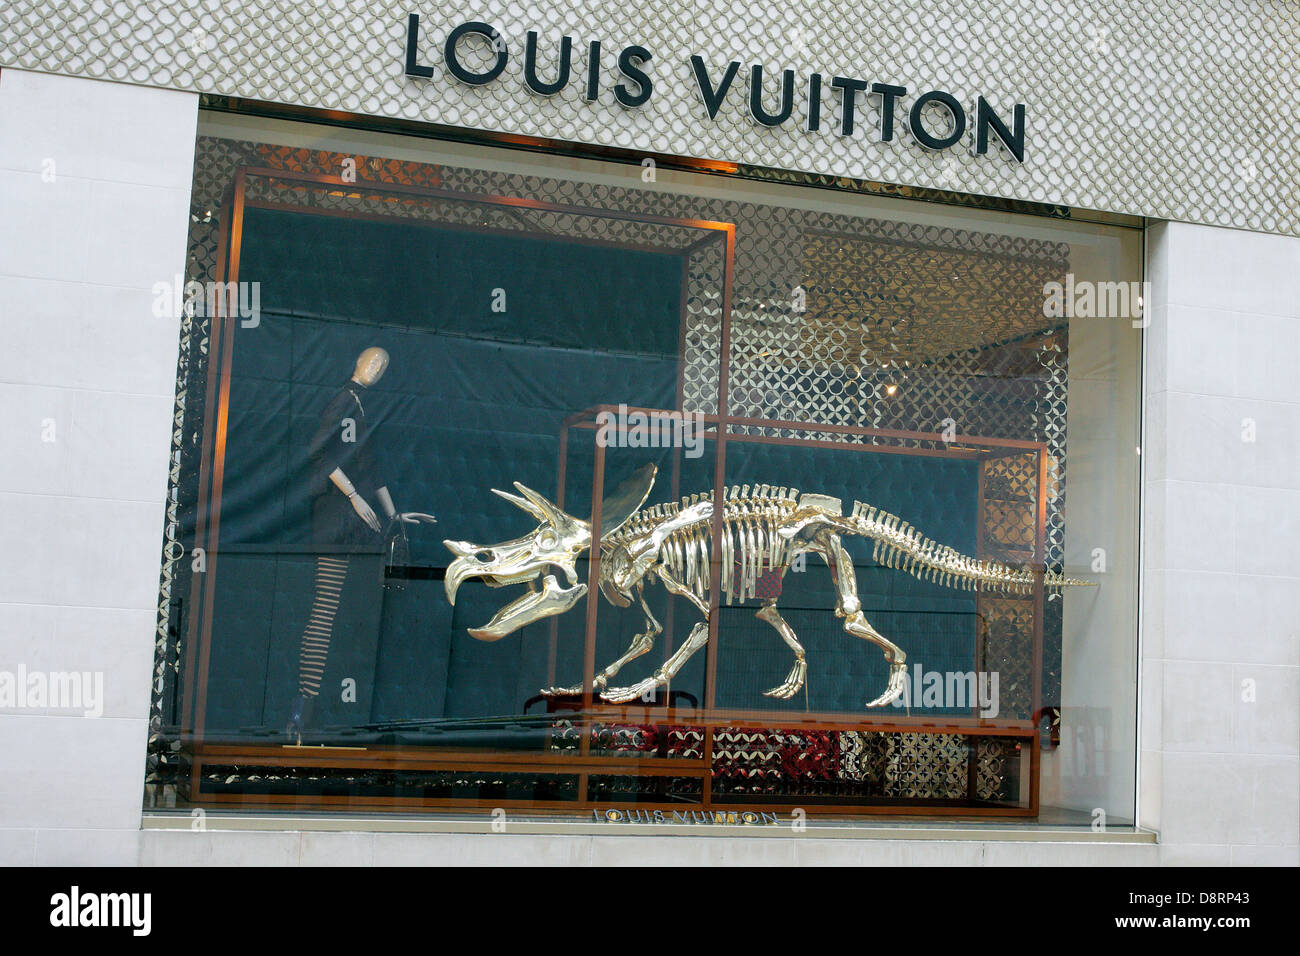 Louis Vuitton Window Display 1, These incredible window dis…